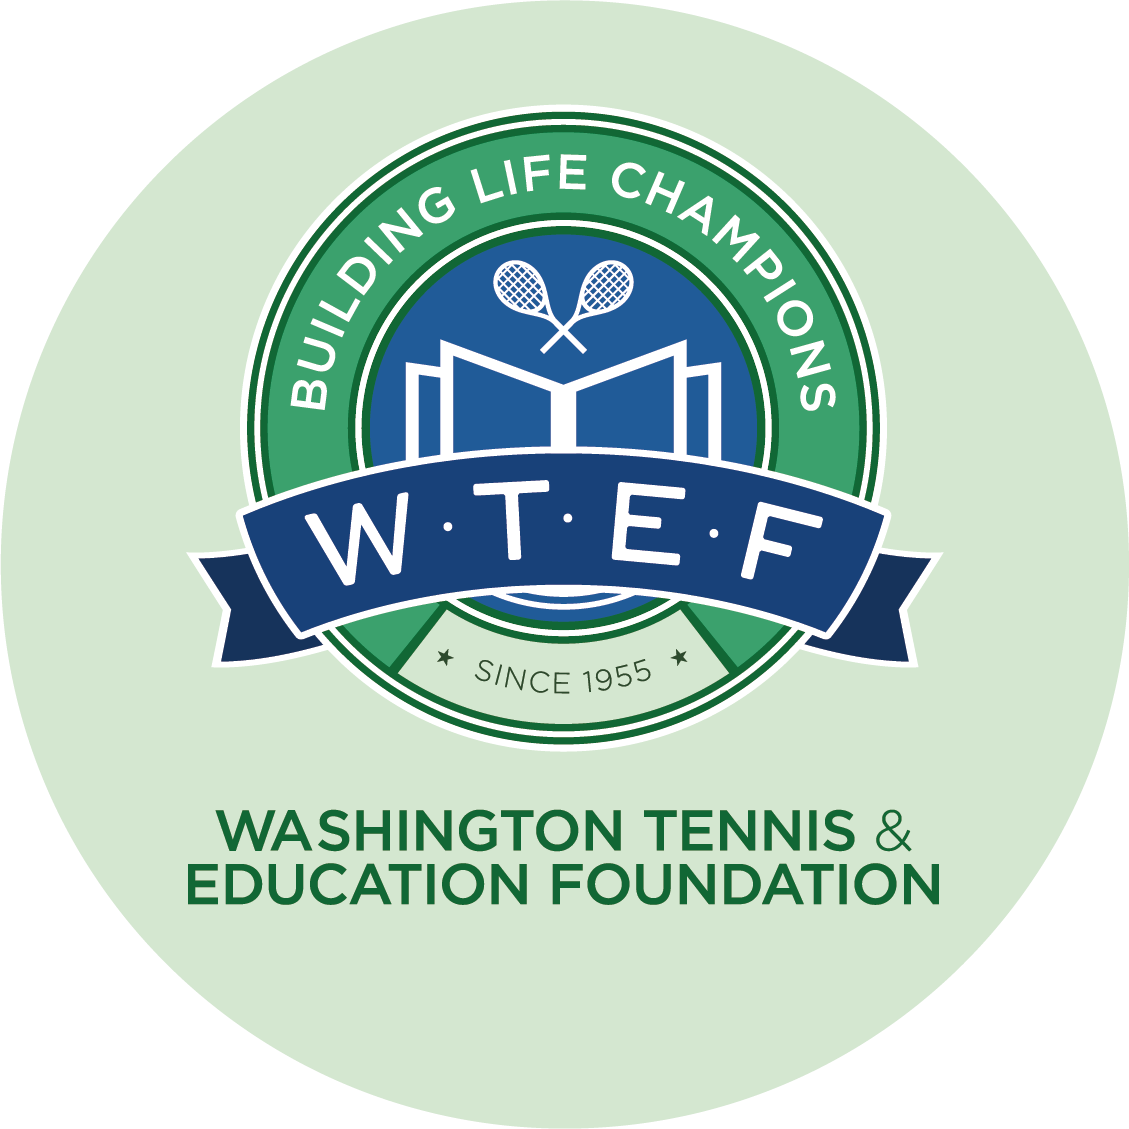 Washington Tennis & Education Foundation logo